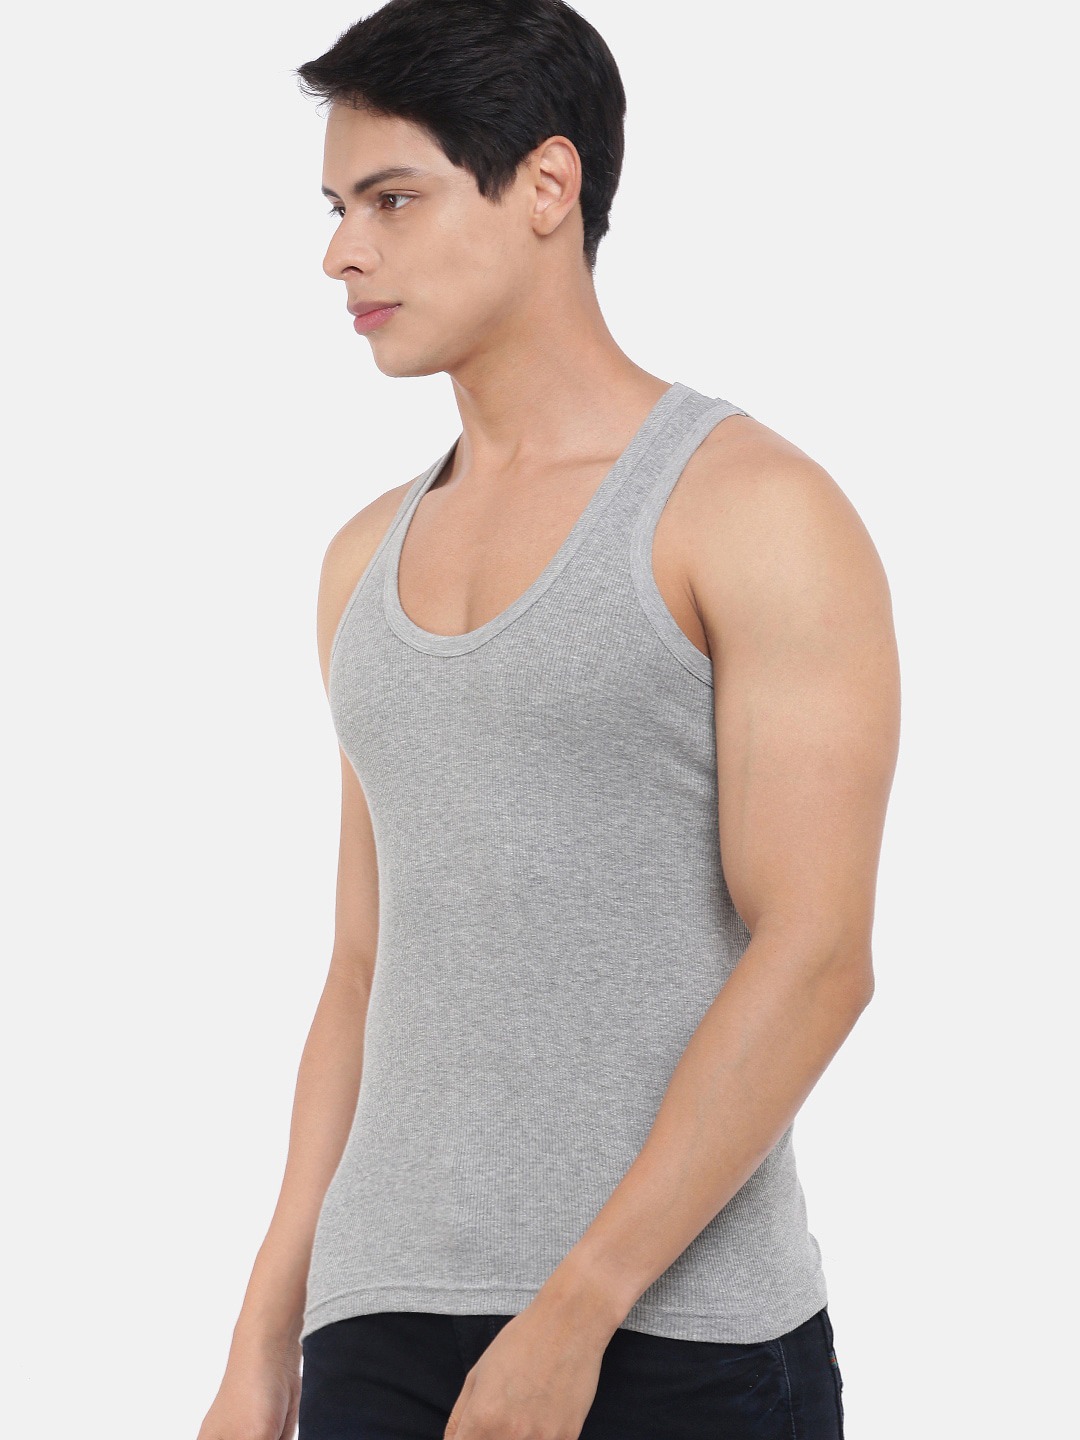 Clothing Innerwear Vests | Dollar Bigboss Men Pack Of 4 Solid Combed Cotton Innerwear Vest - FK91978